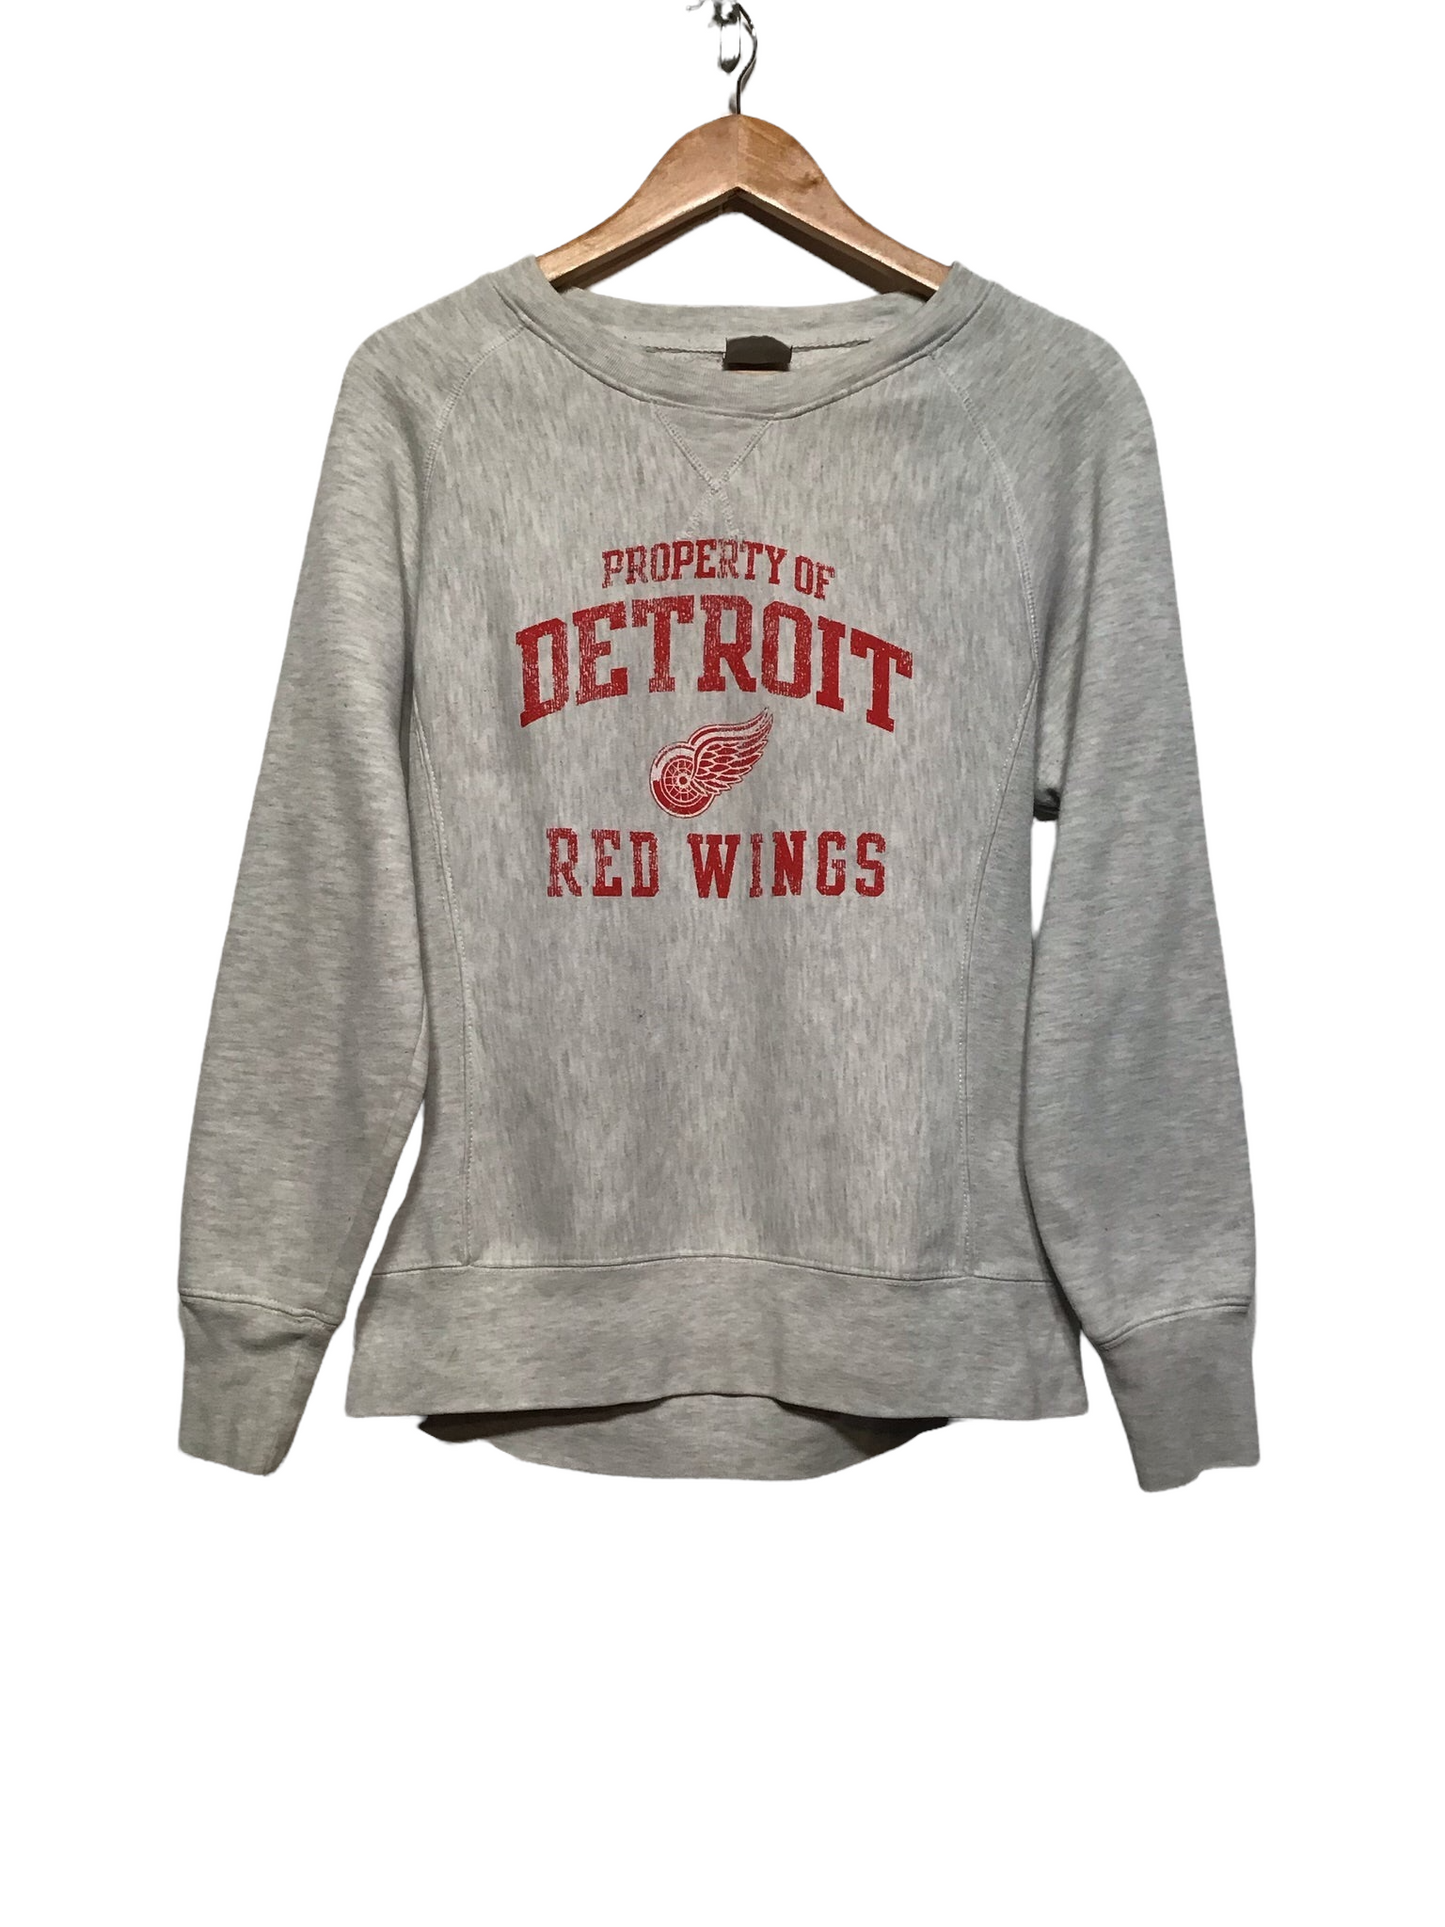 NHL Detroit Red Wings Sweatshirt (Size S)